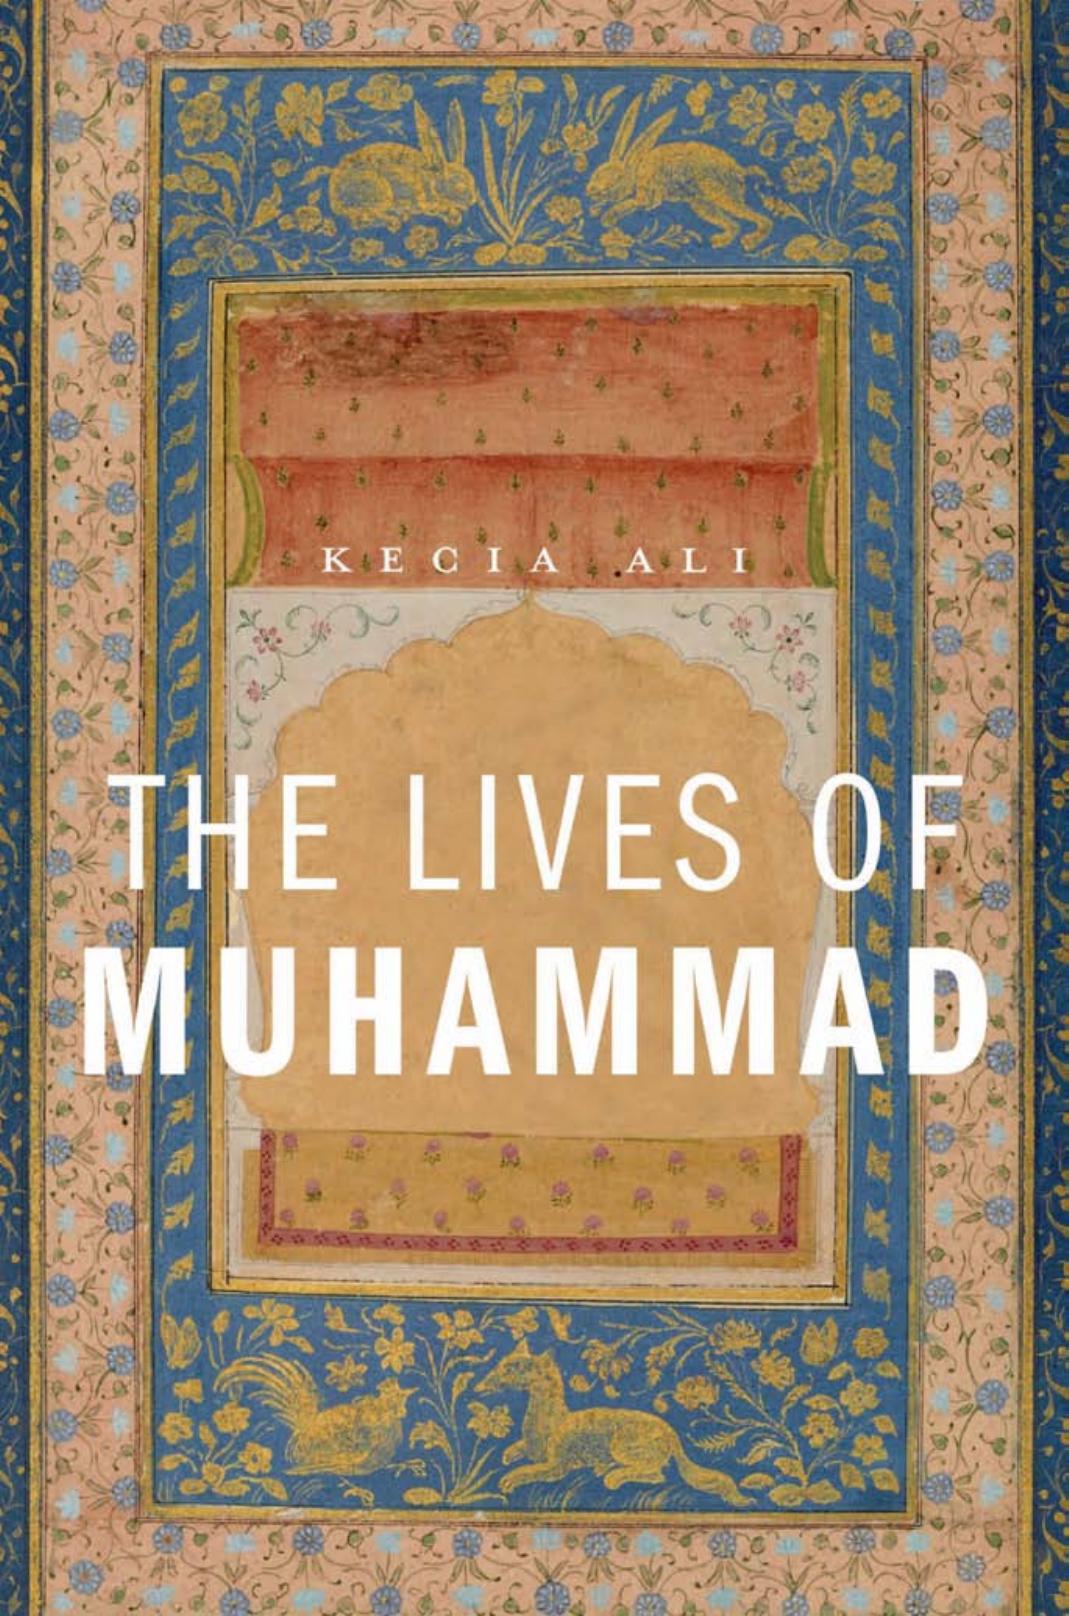 The Lives of Muhammad by Kecia Ali